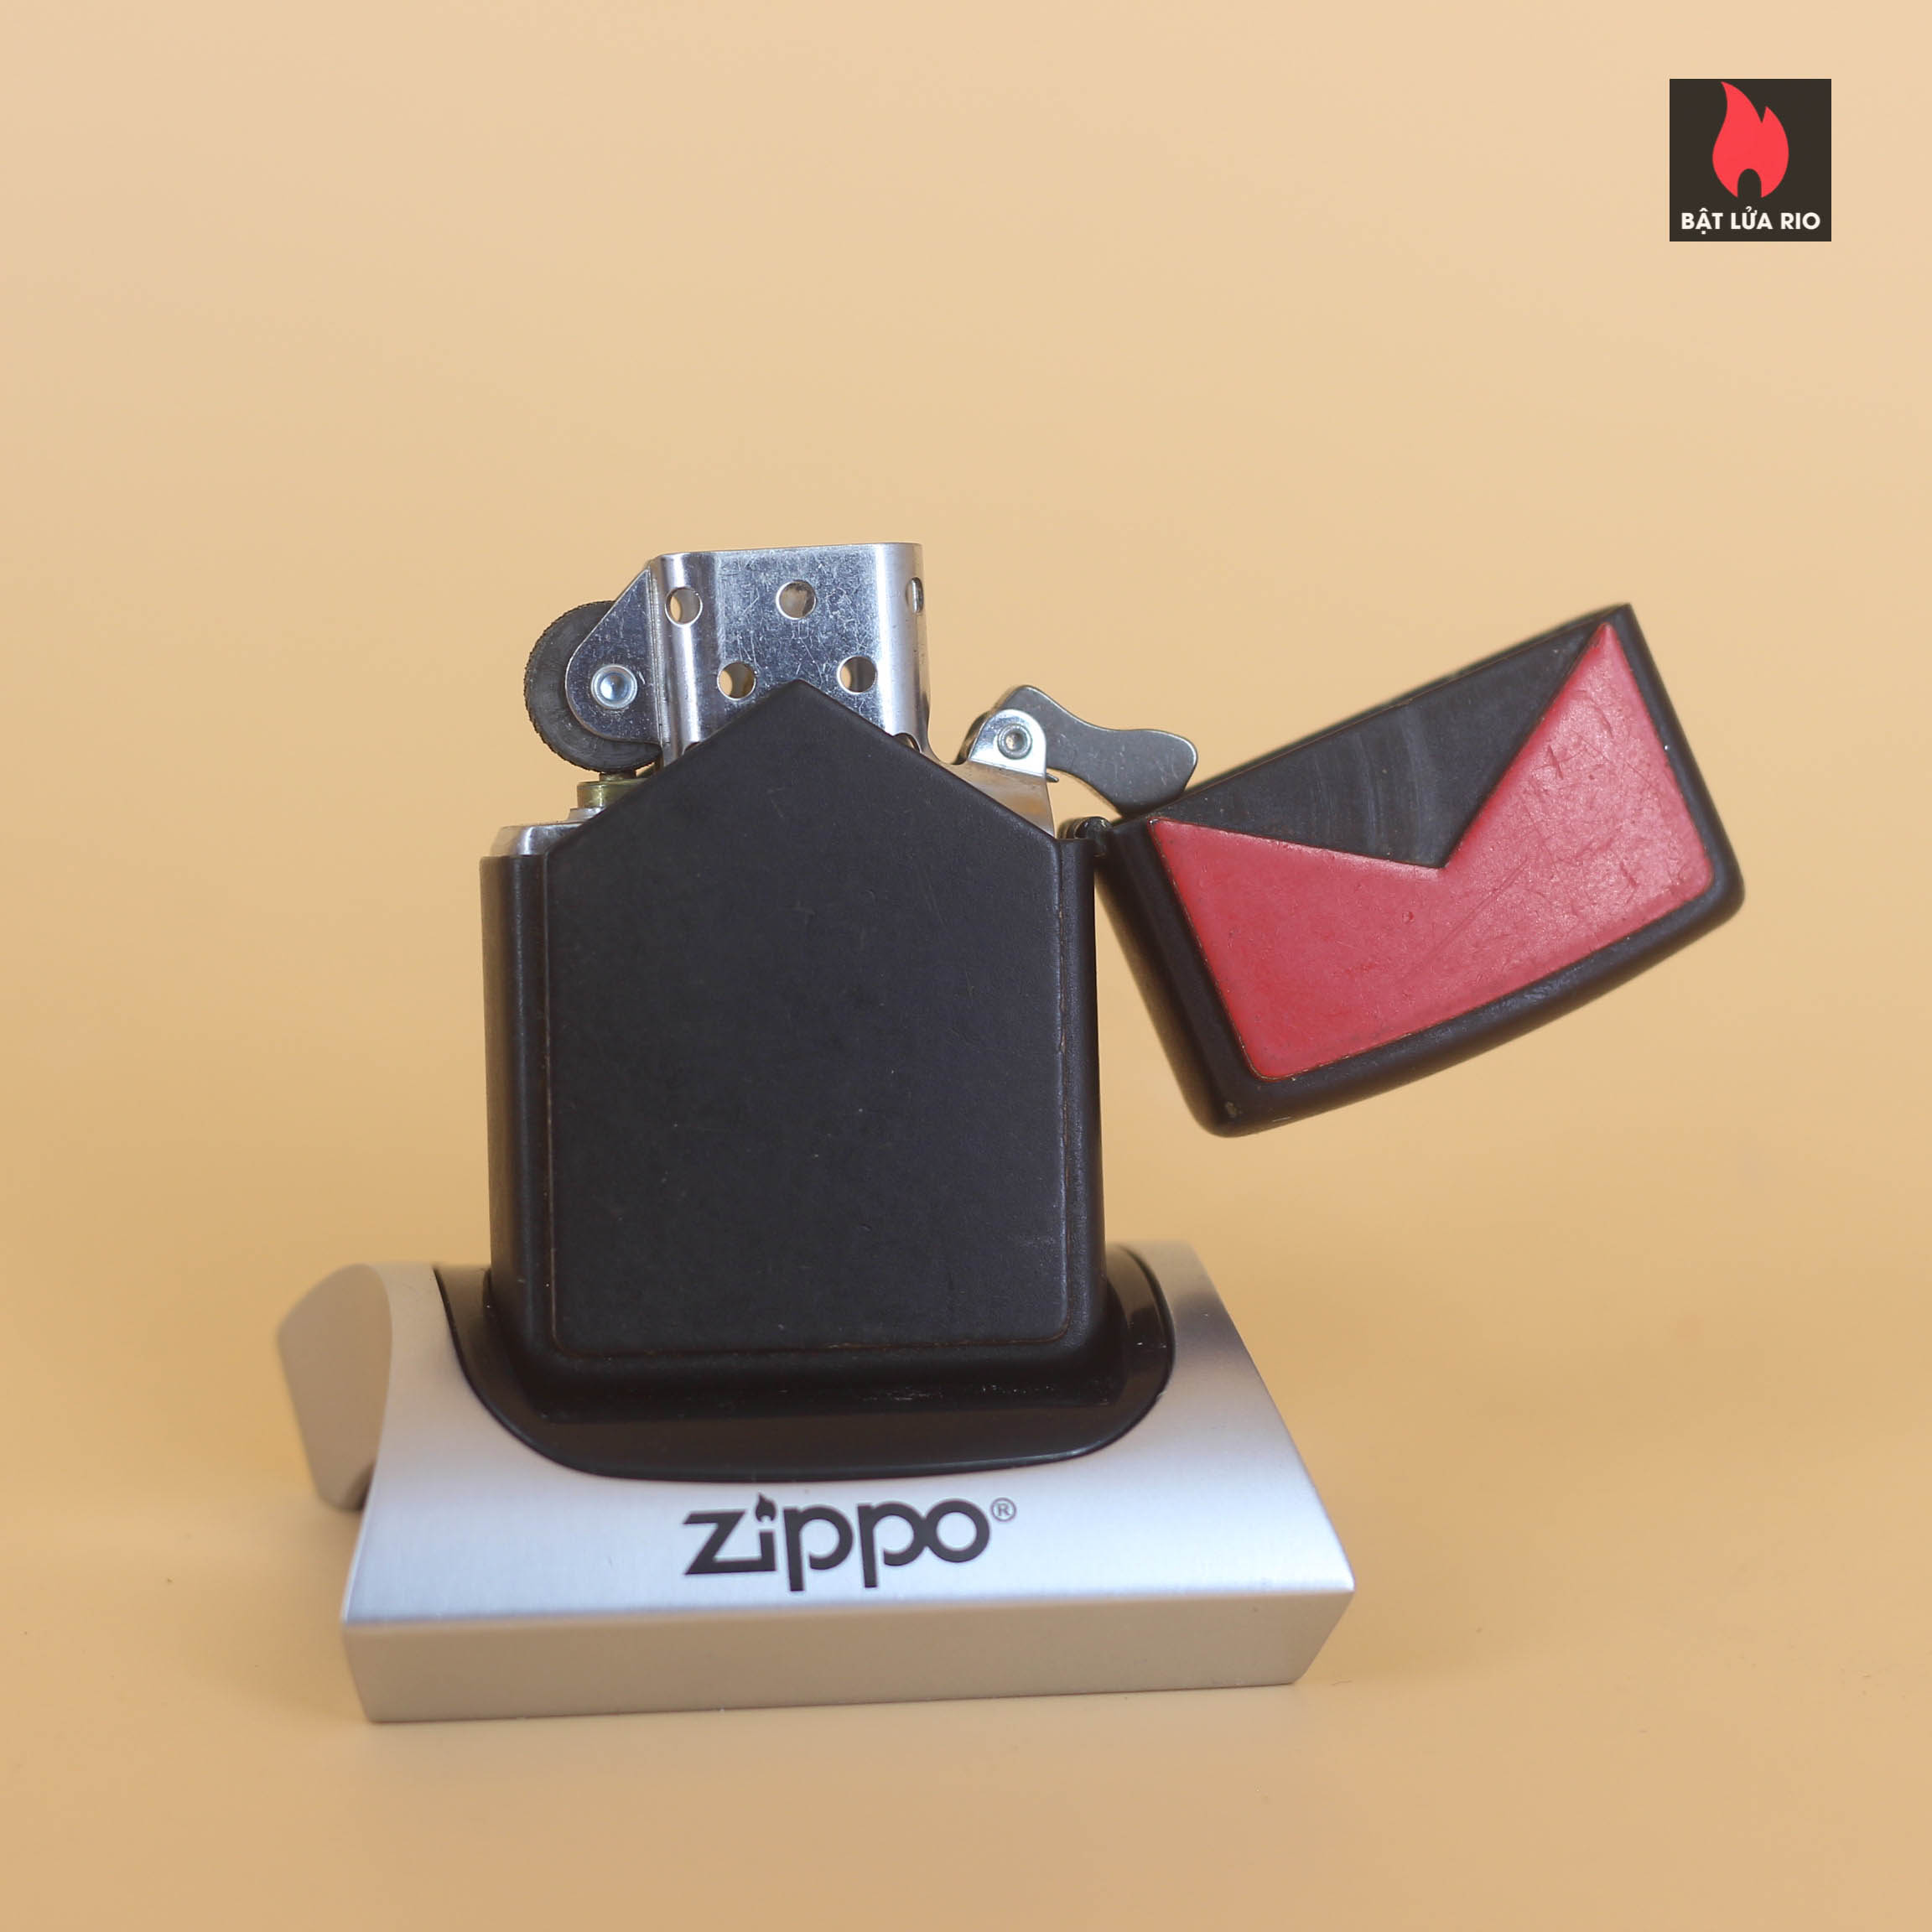 Zippo La Mã 1996 – Marlboro Red Roof 2